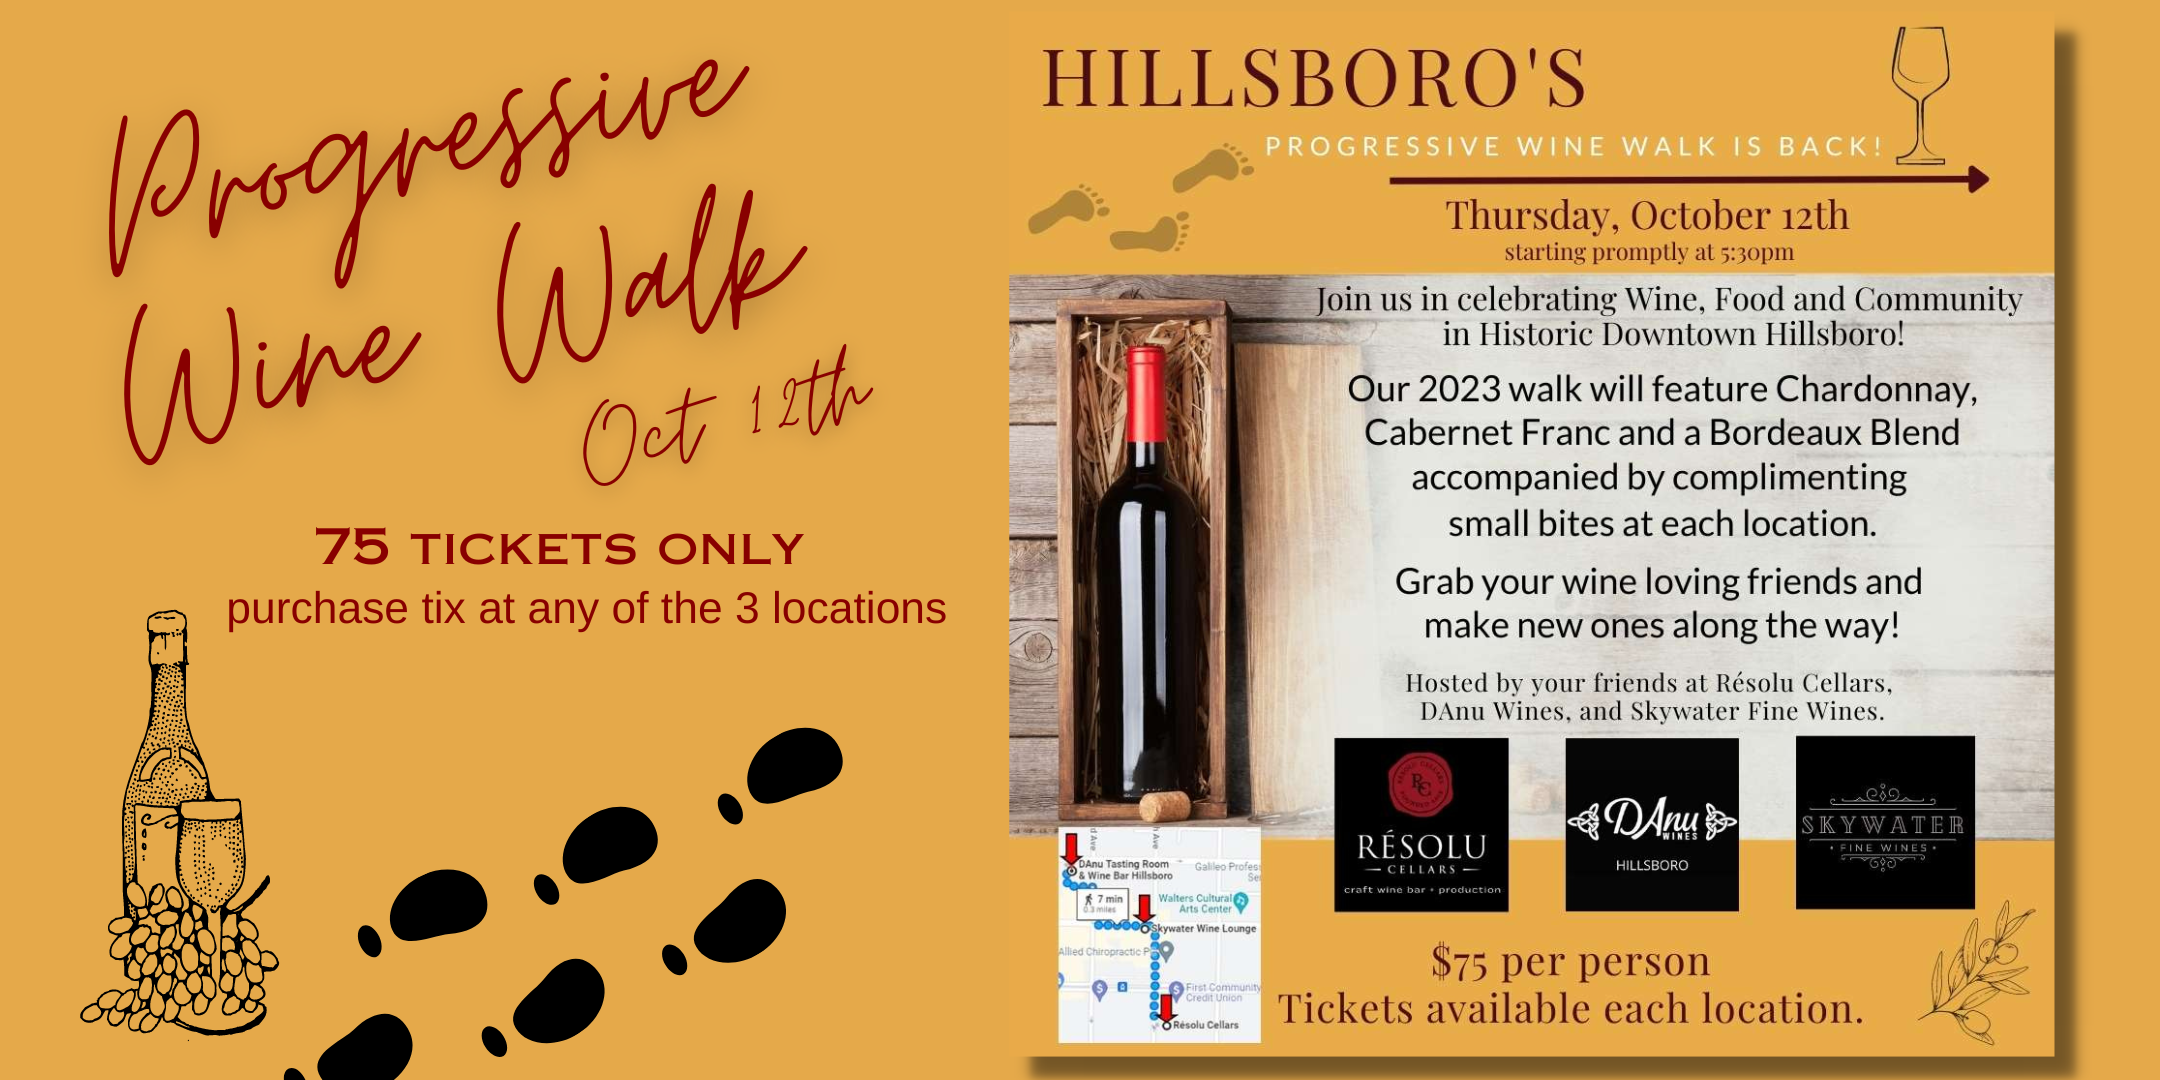 Progressive Wine Walk: Historic Hillsboro Downtown